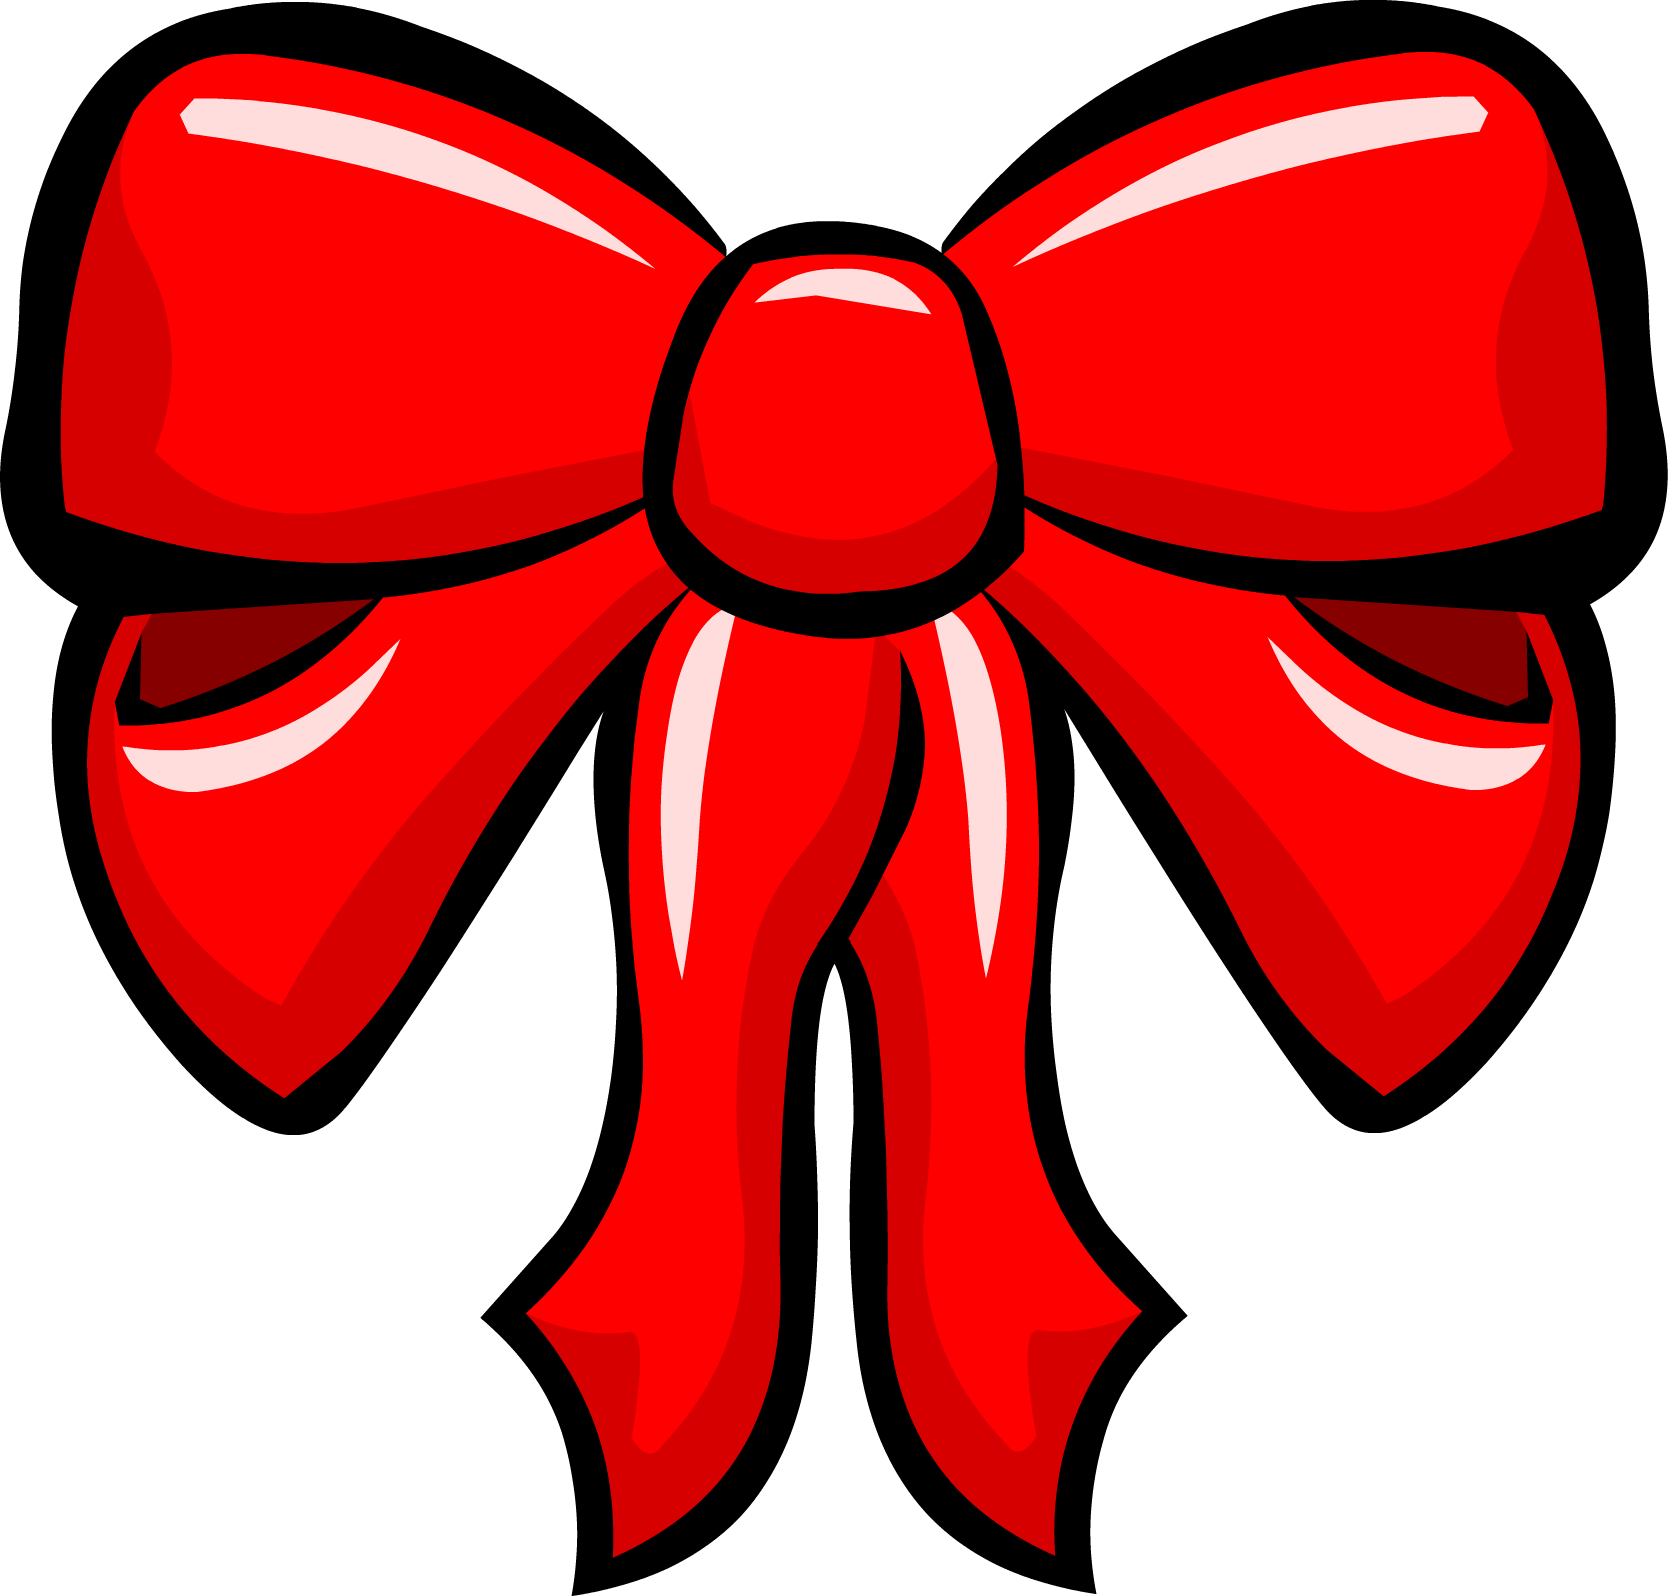 Red Christmas Ribbon PNG Image - PurePNG